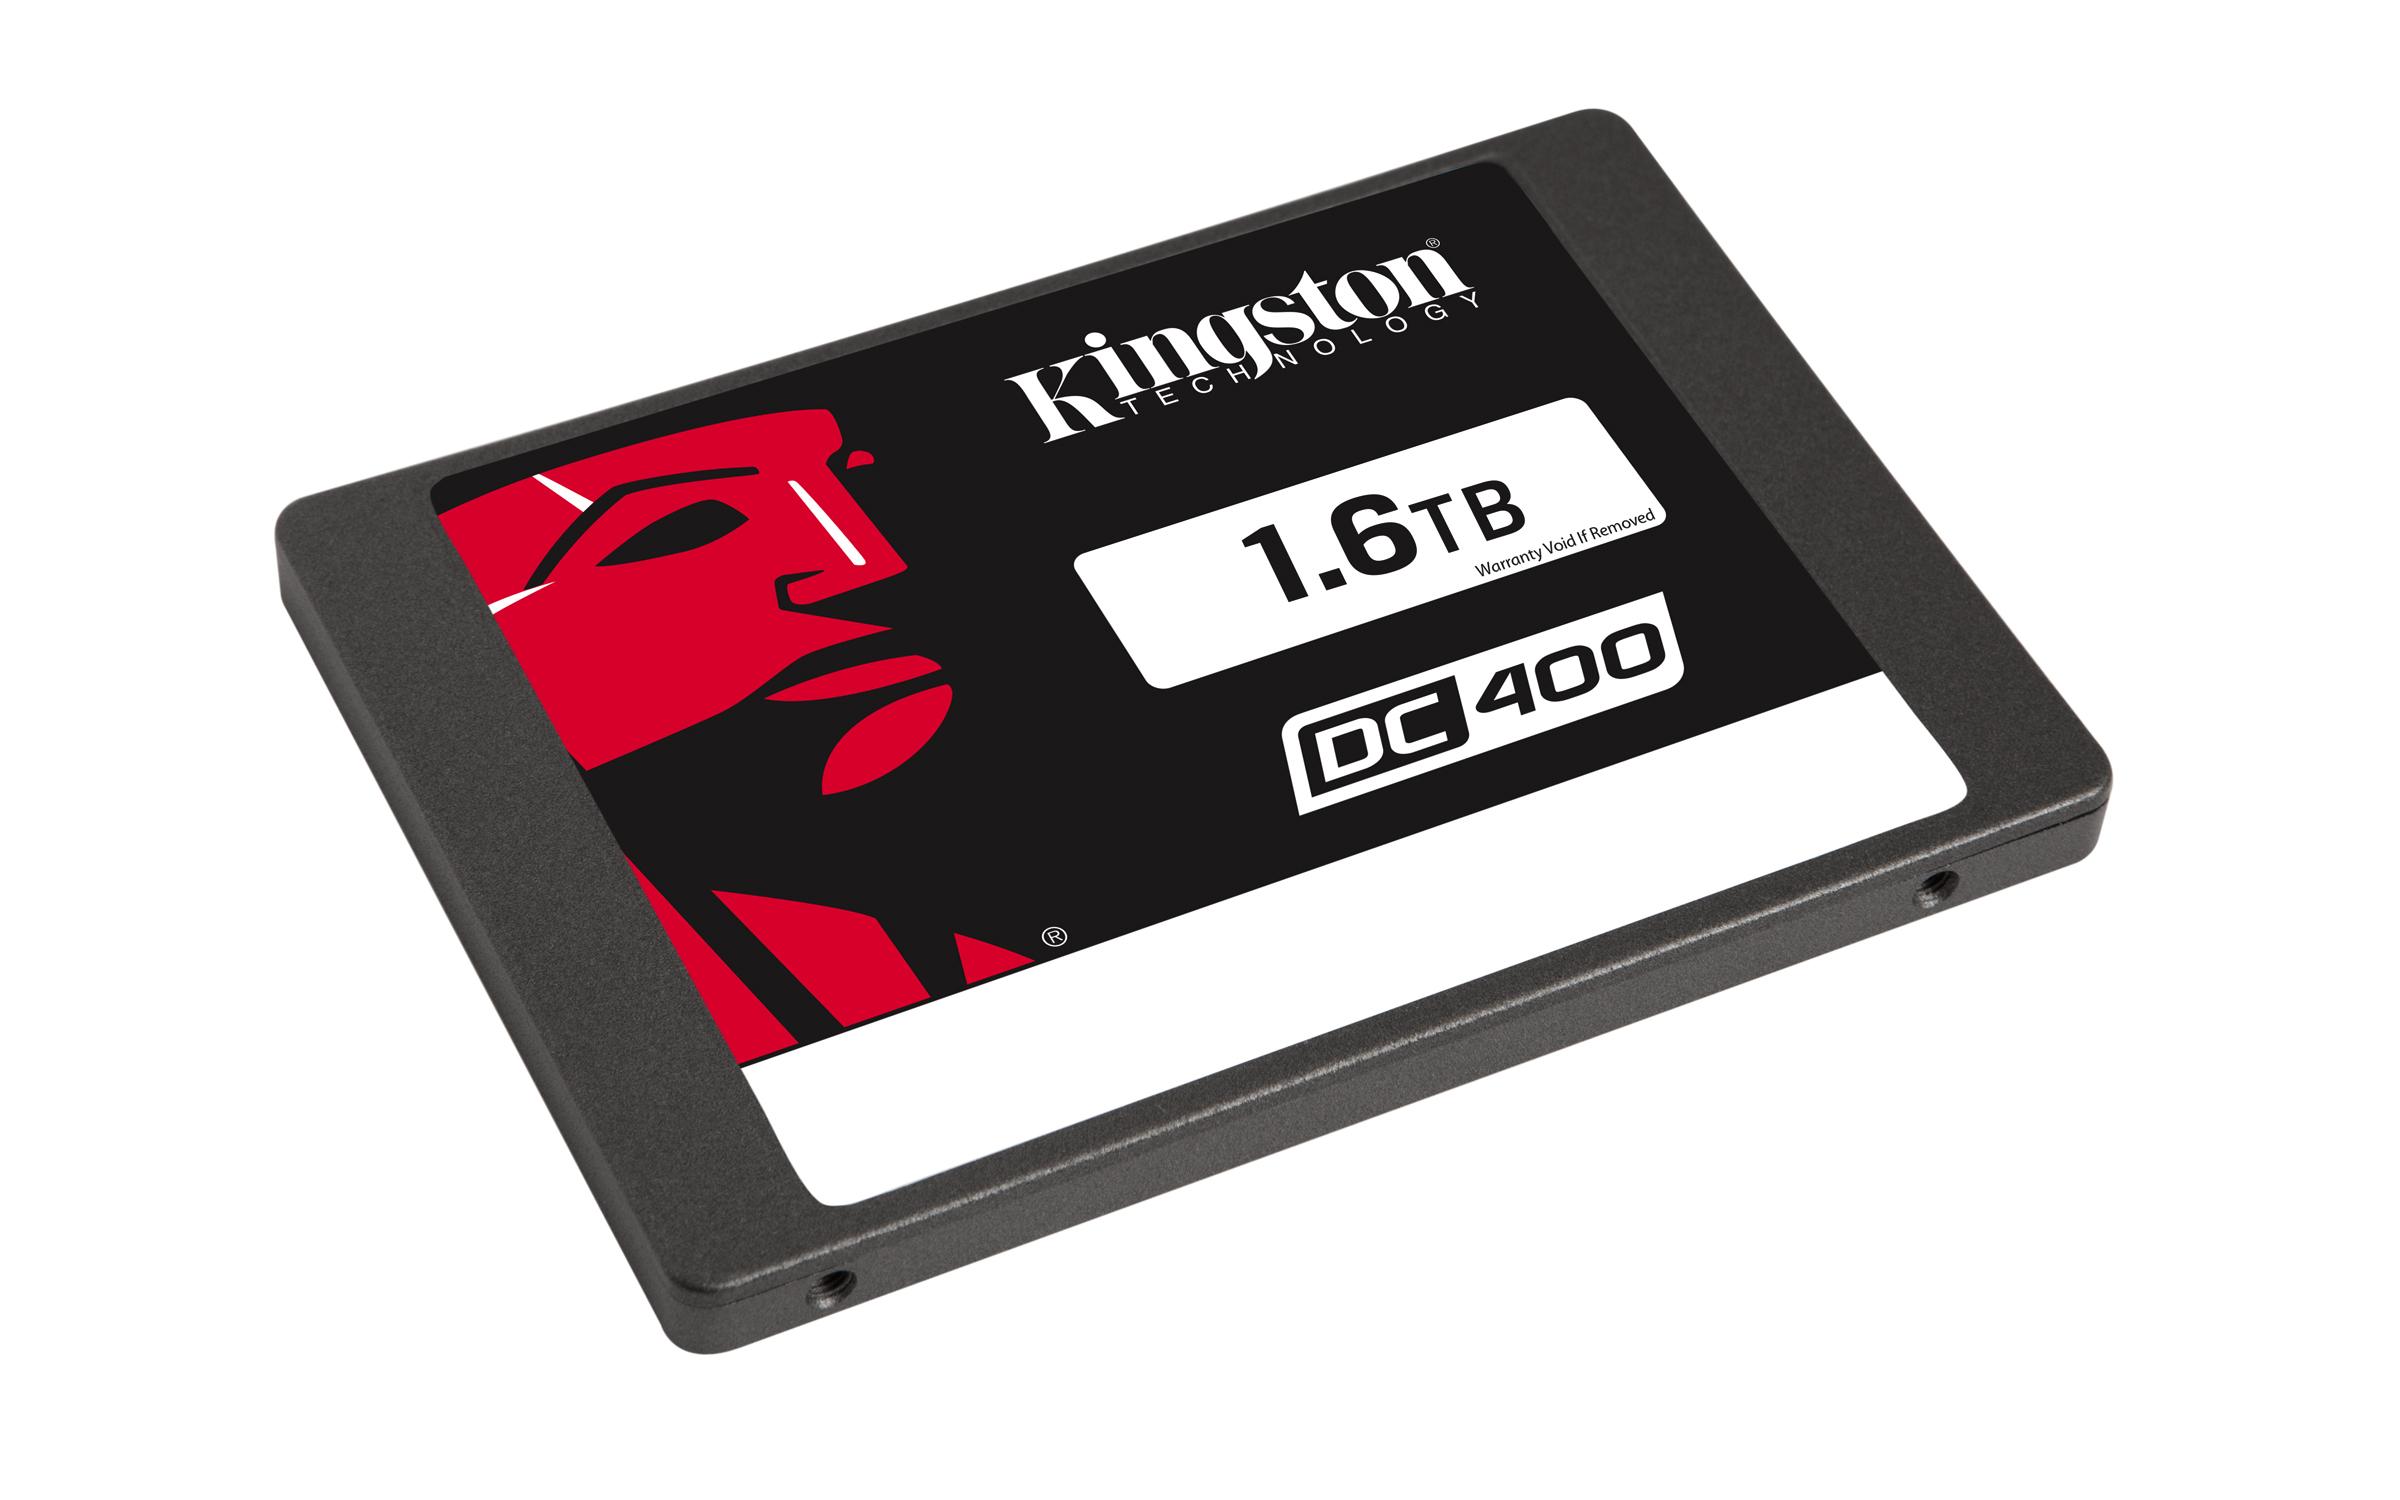 HD SSD 1,6To Kingston SSDNow DC400 [3932006] à 829.9€ - Generation Net